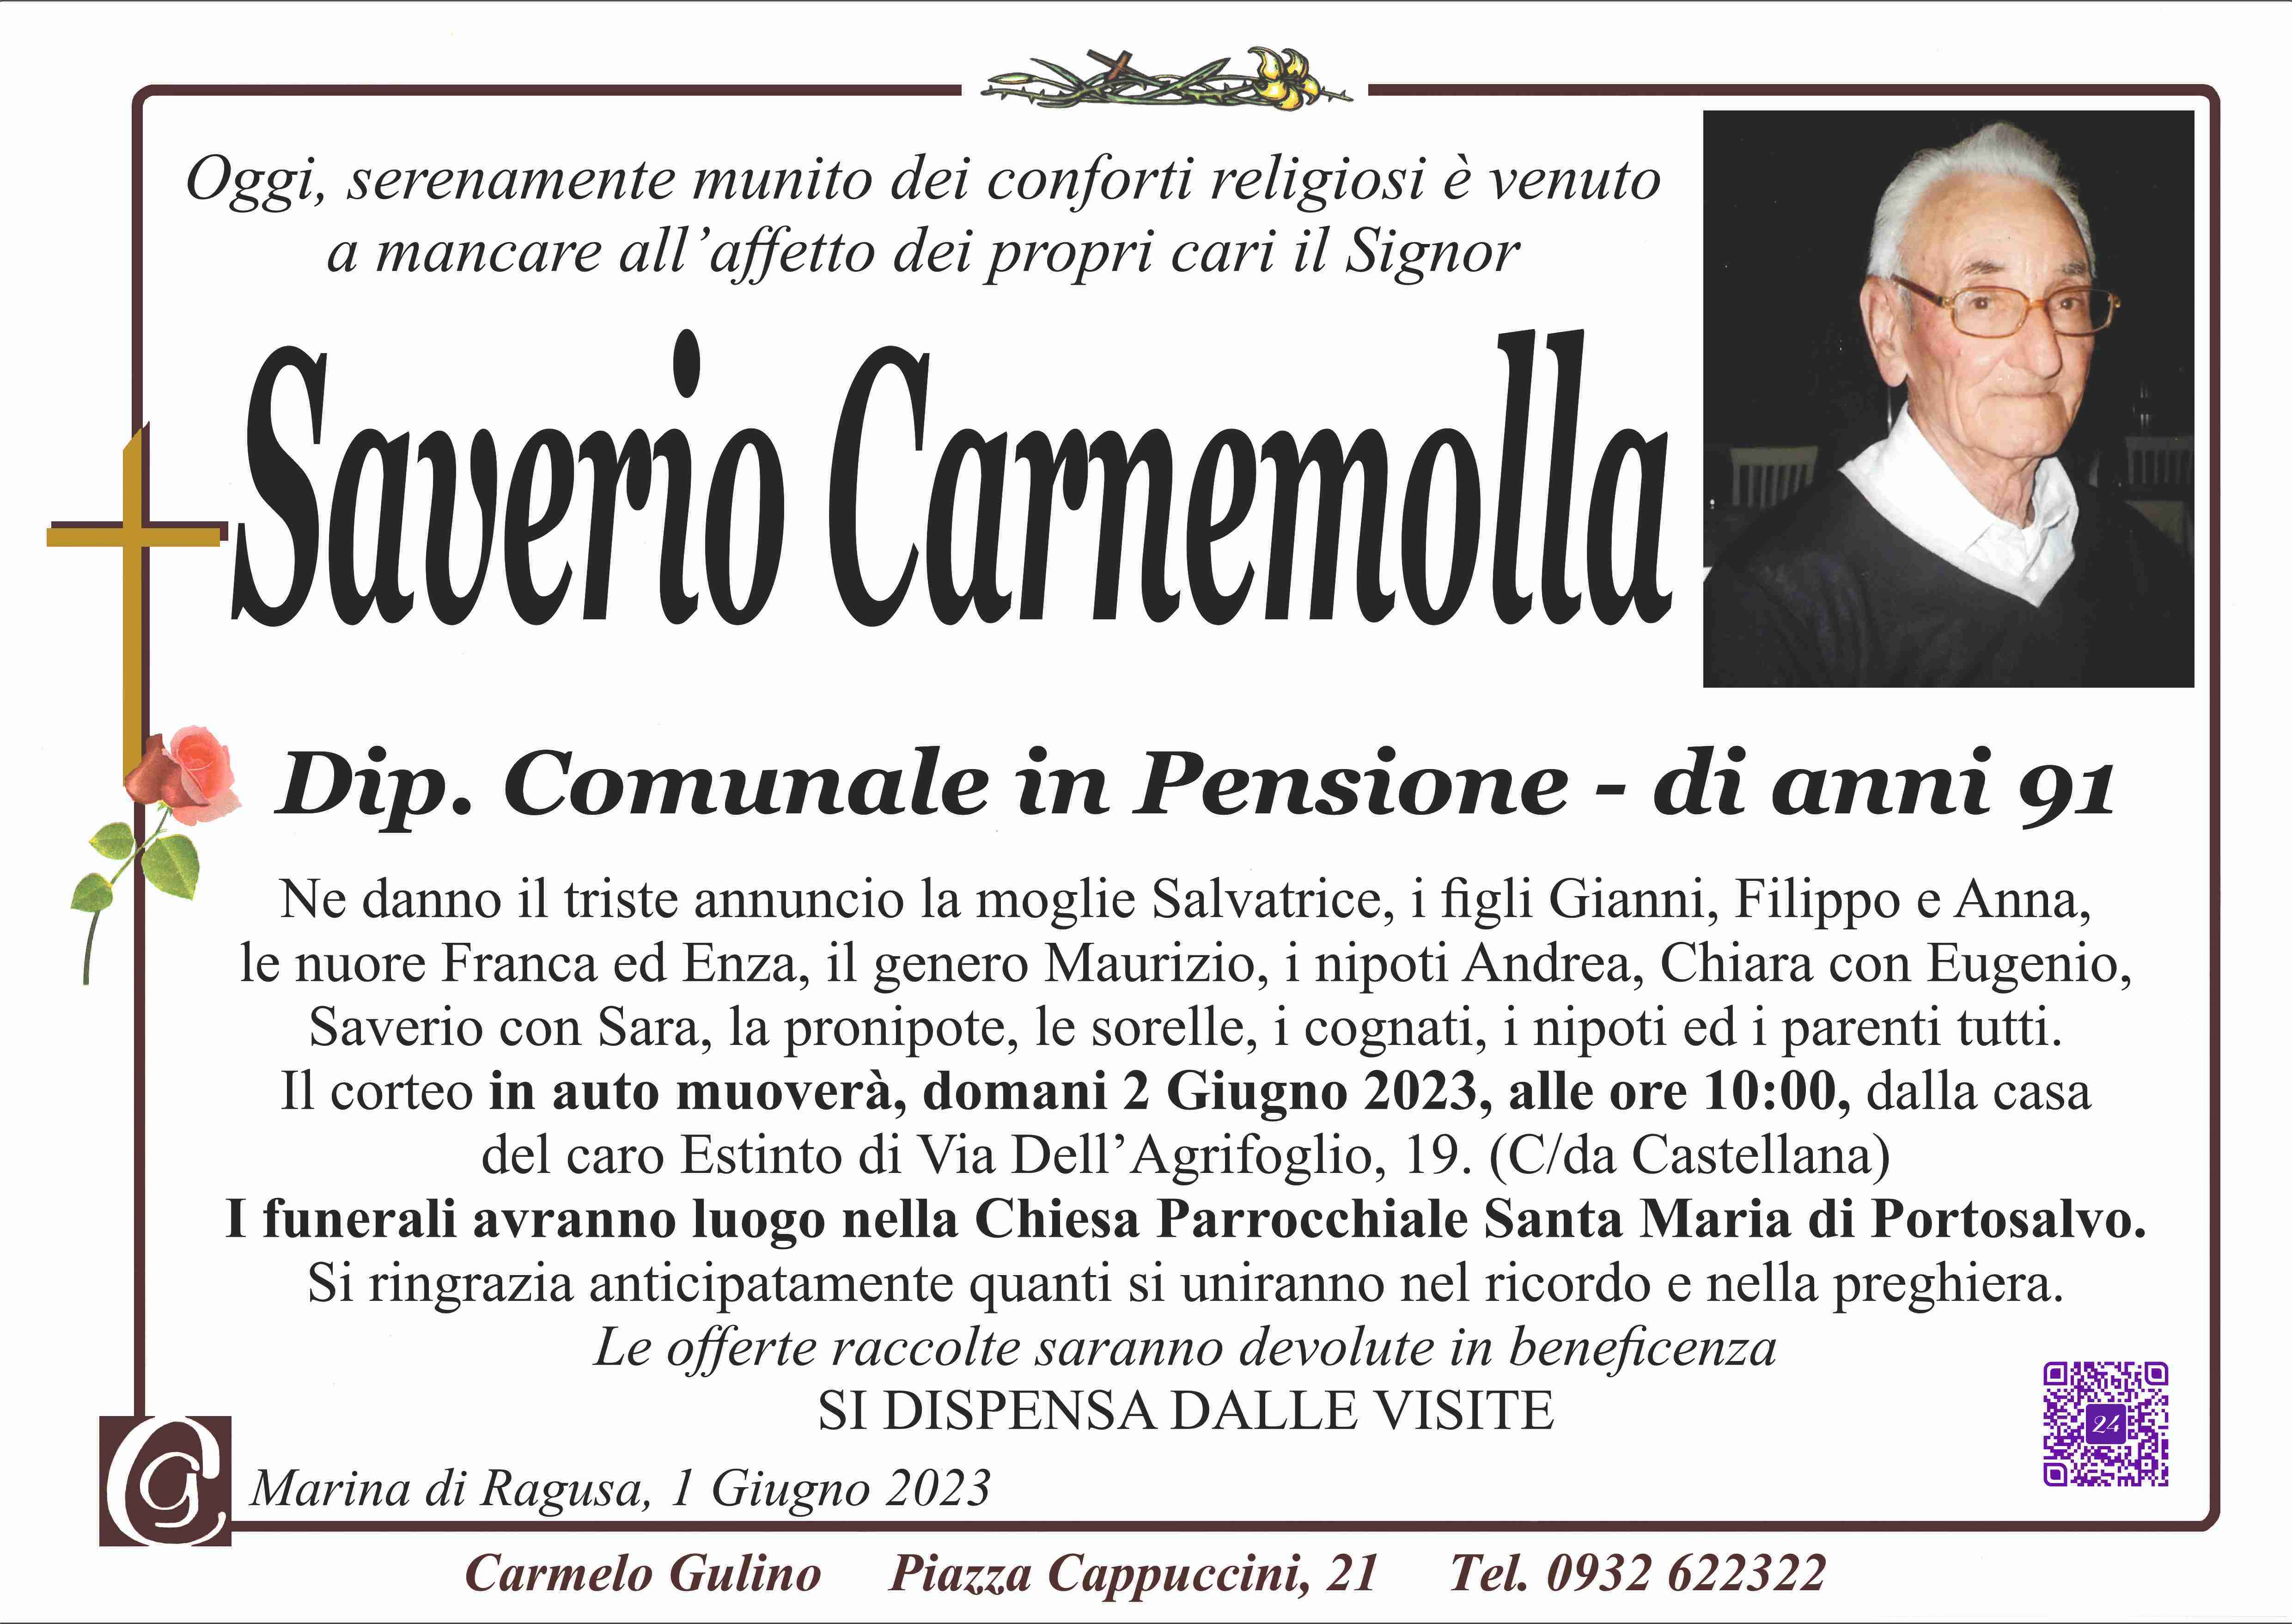 Saverio Carnemolla